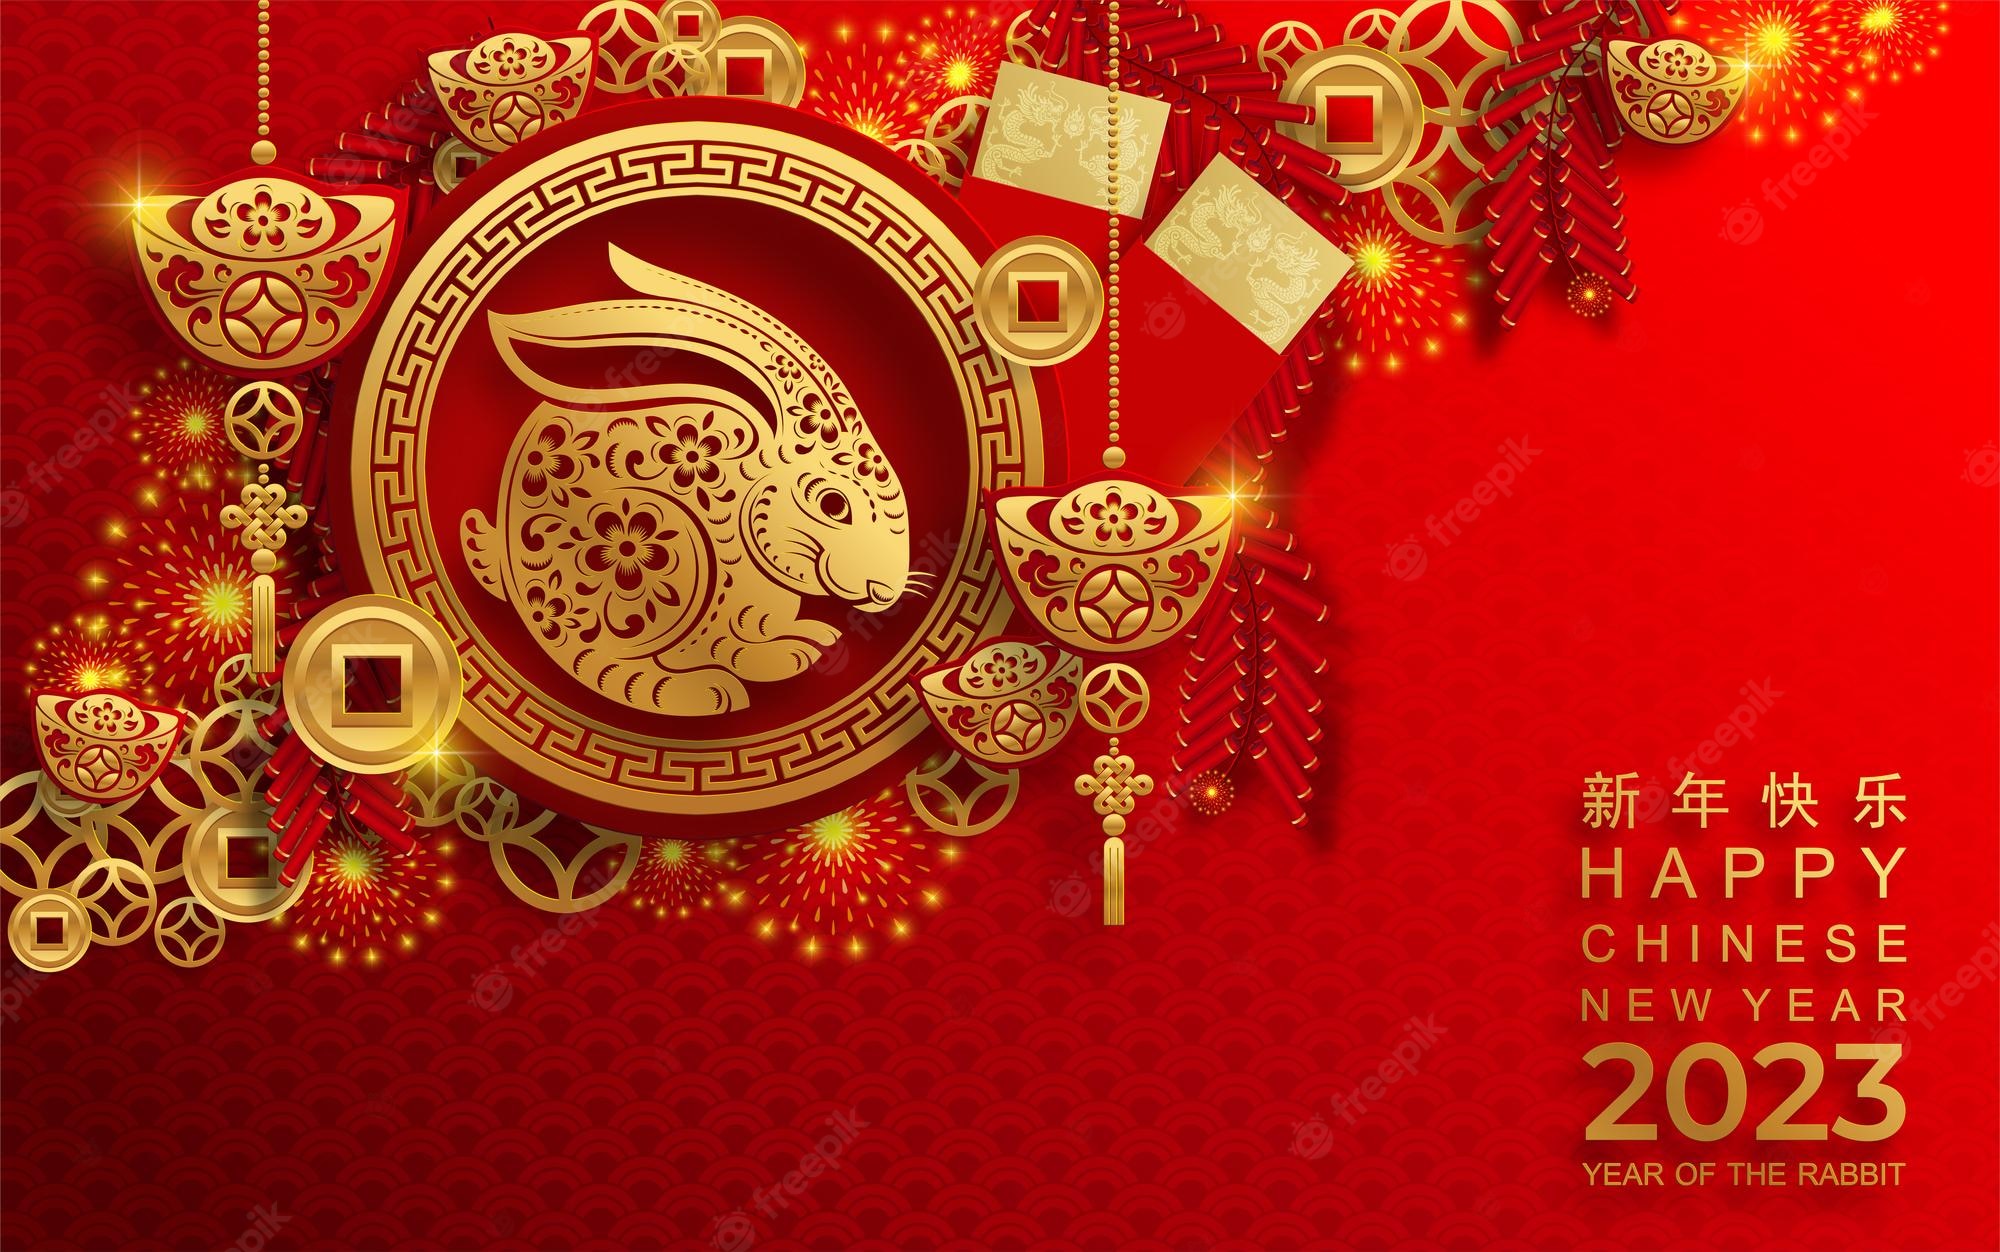 Premium Vector. Happy chinese new year 2023 year of the rabbit